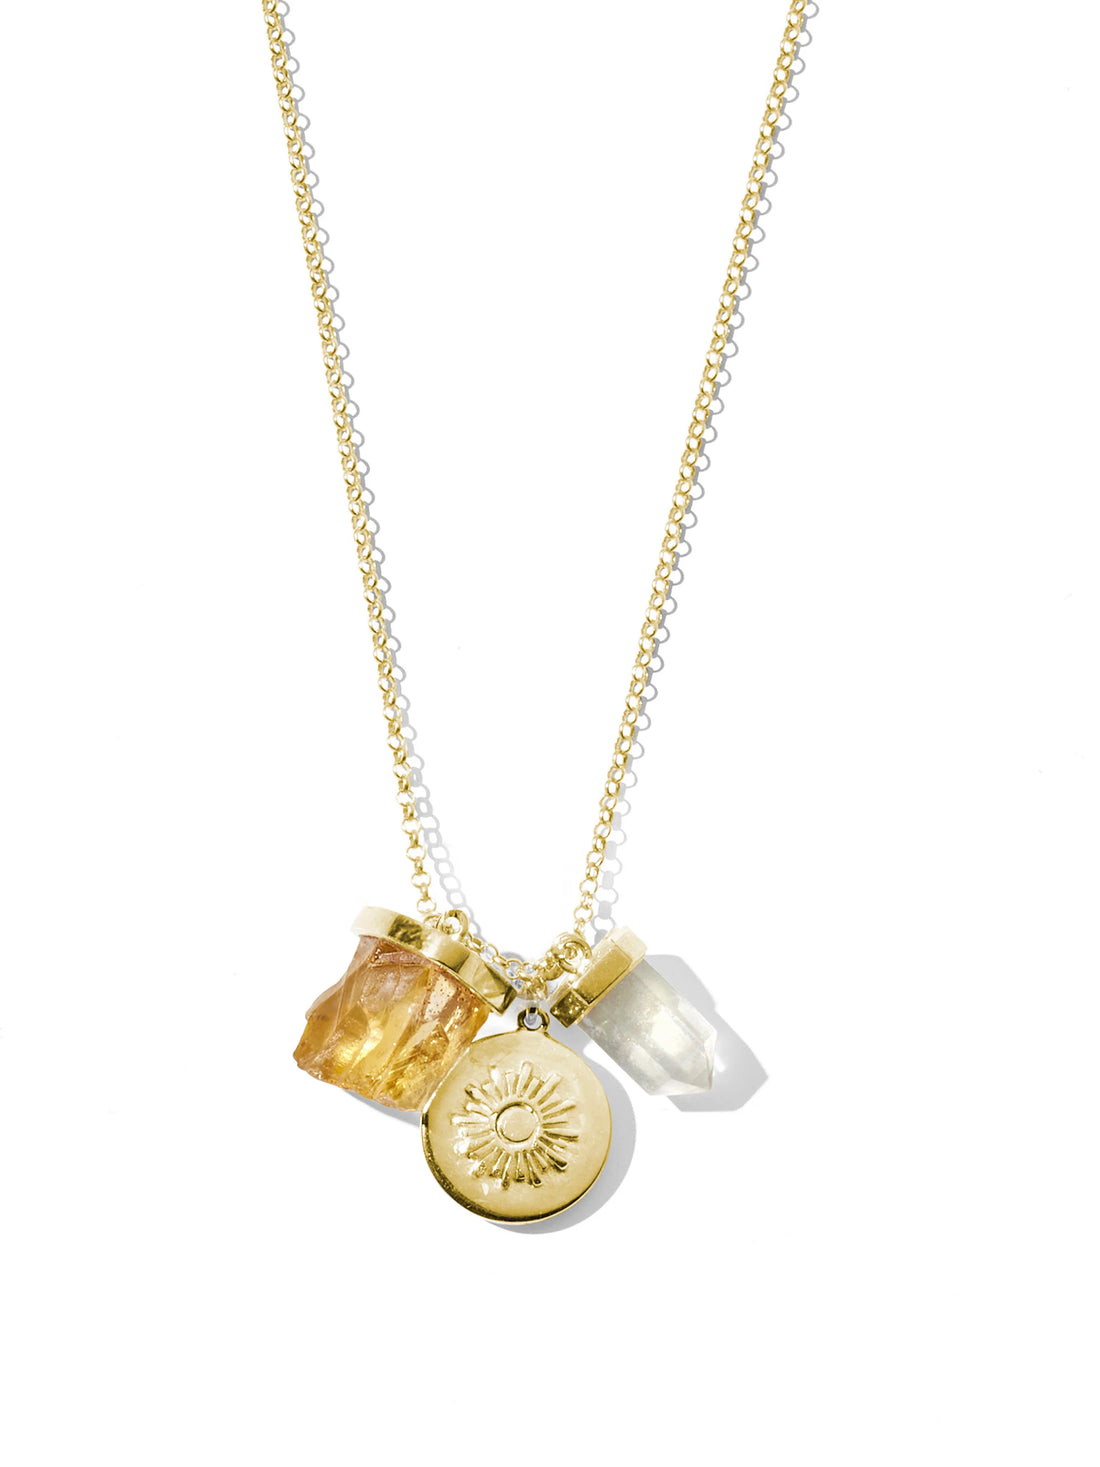 Krystle Knight Jewellery Prosperity Necklace - Citrine, Clear Quartz + Sun (Gold)